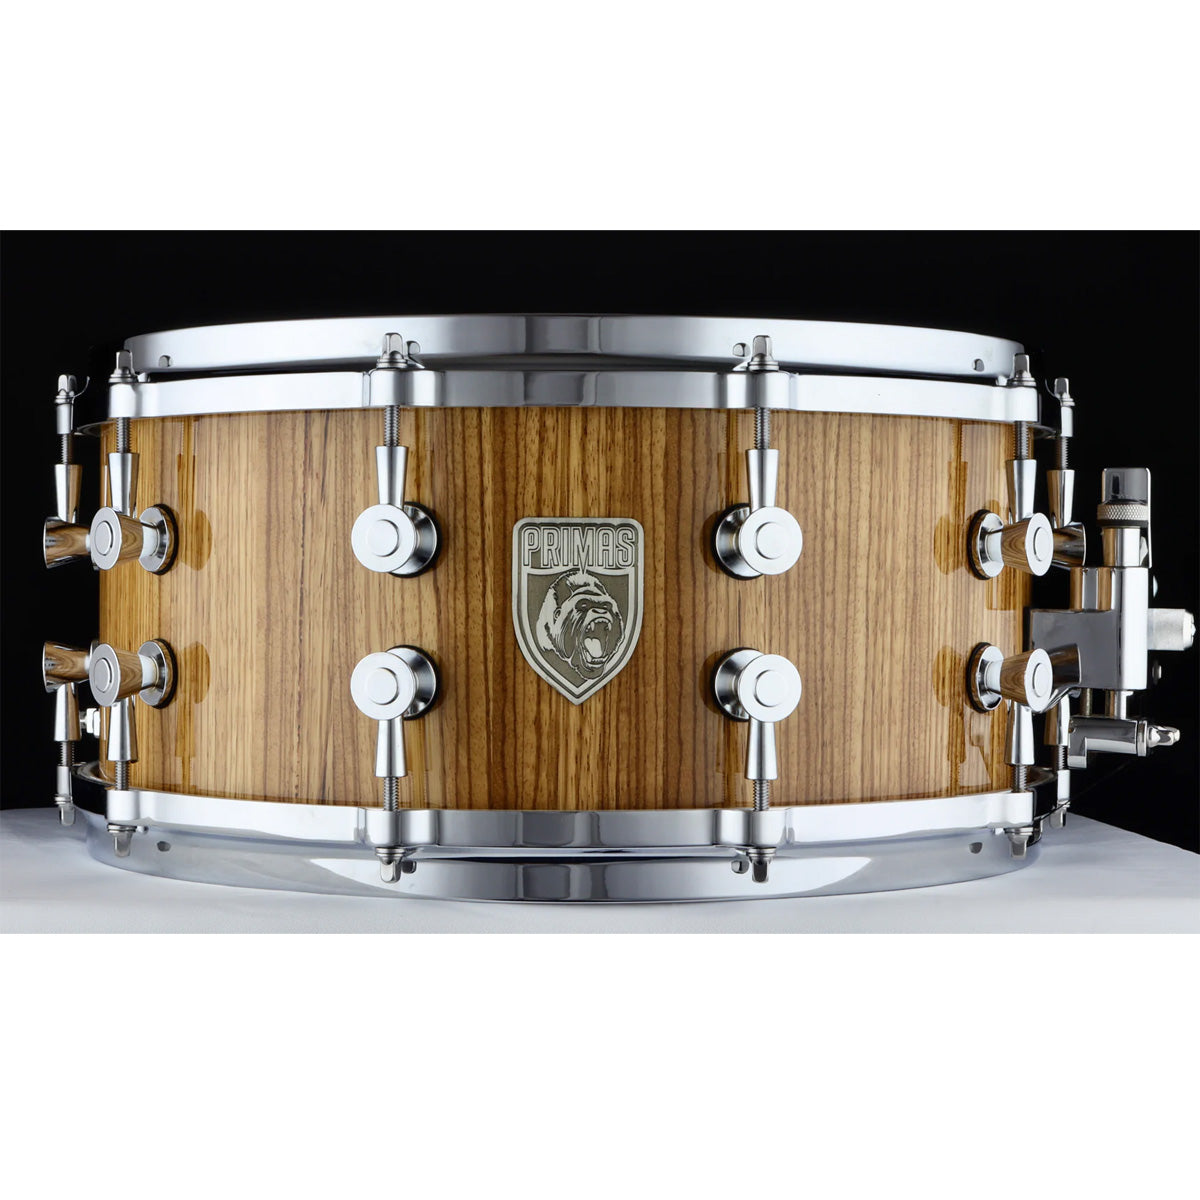 Primas Custom Shop 14"x6.5" Zebrano Snare Drum